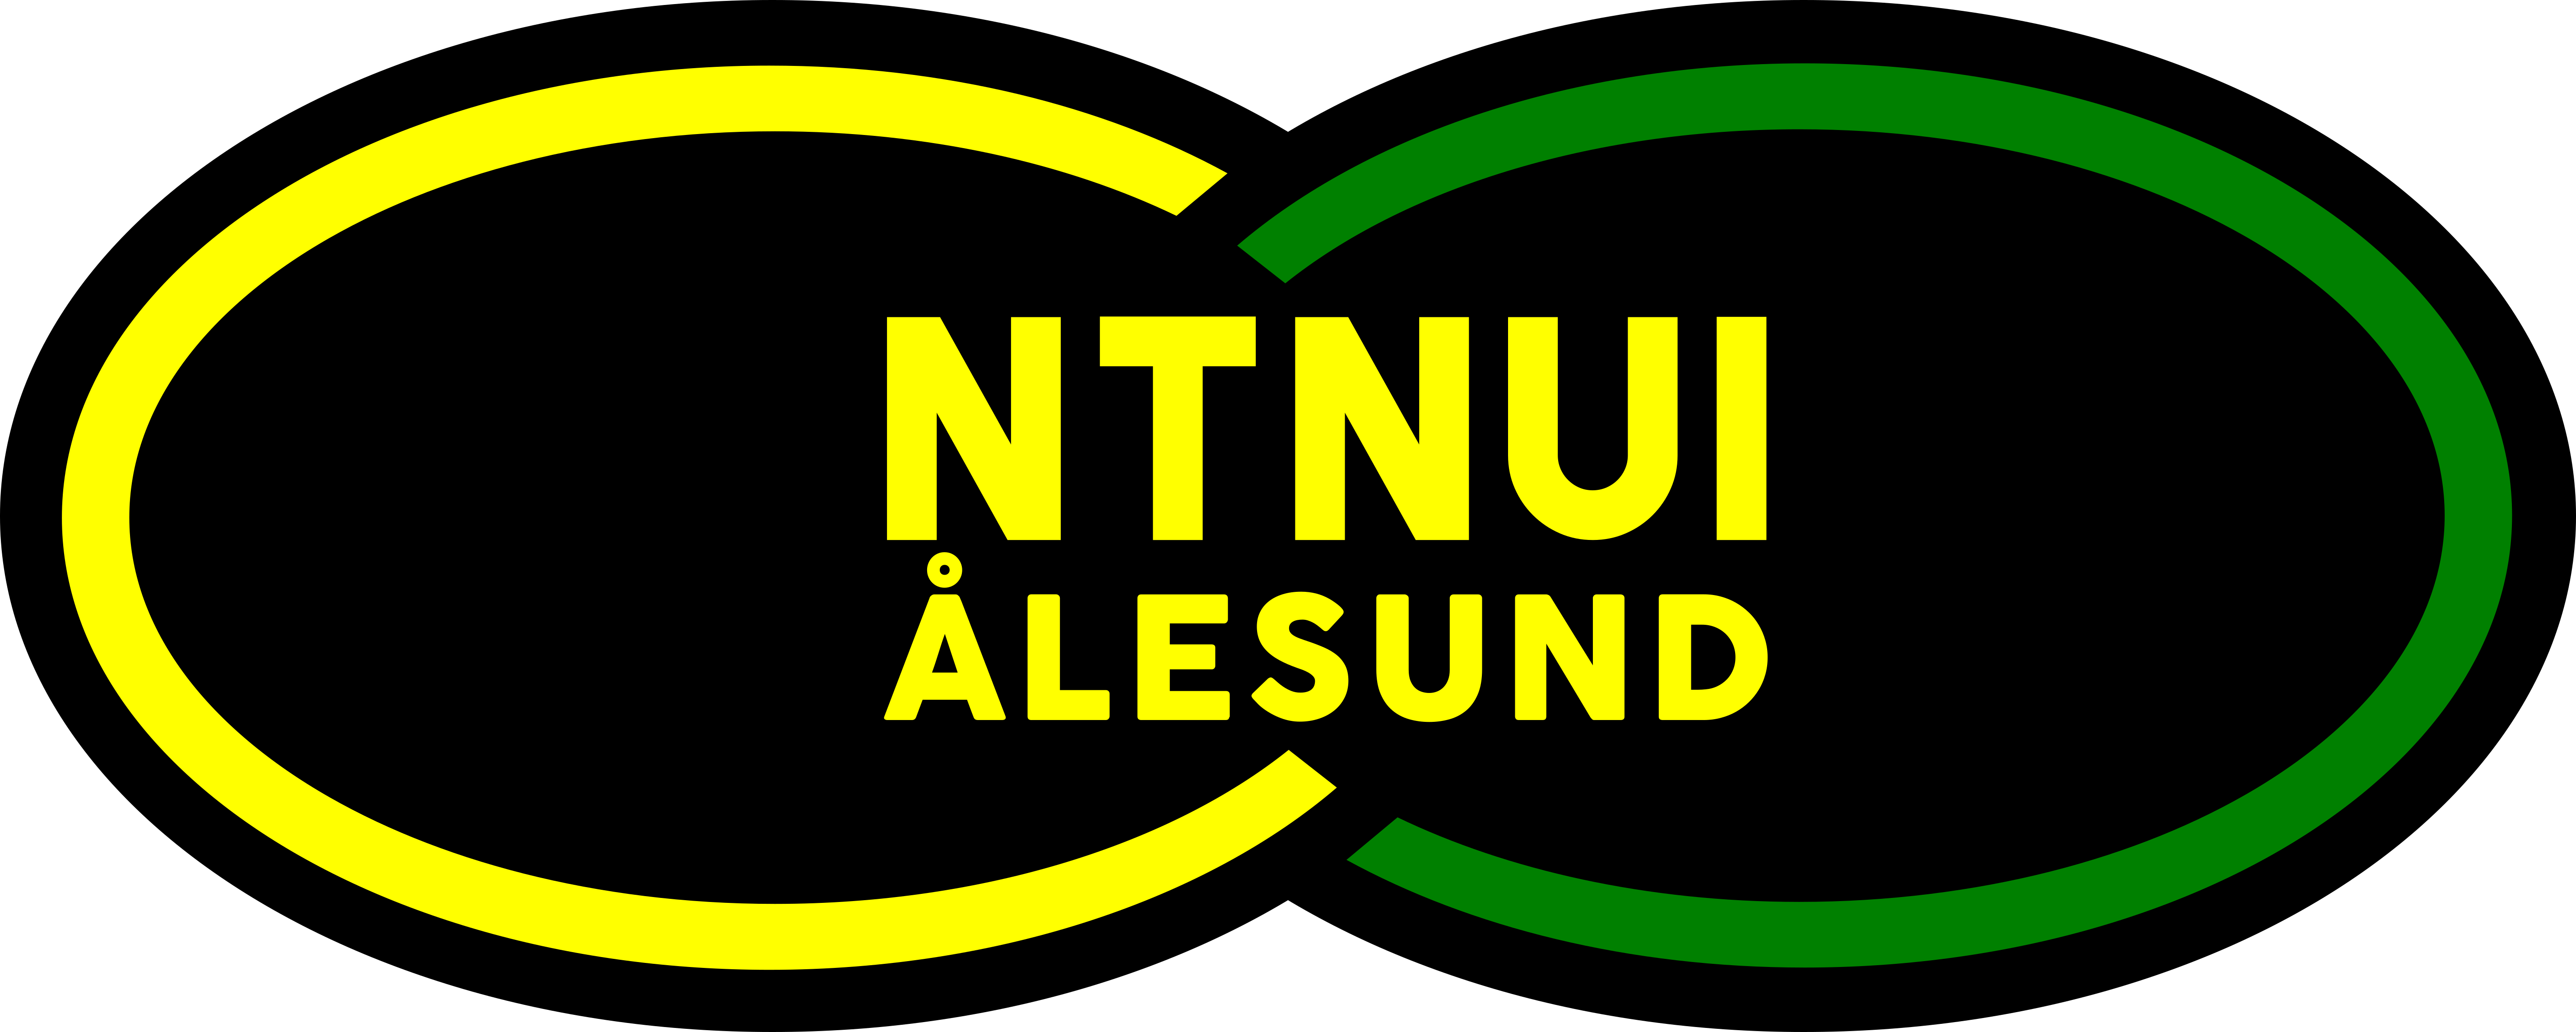 NTNUI-lesund logo